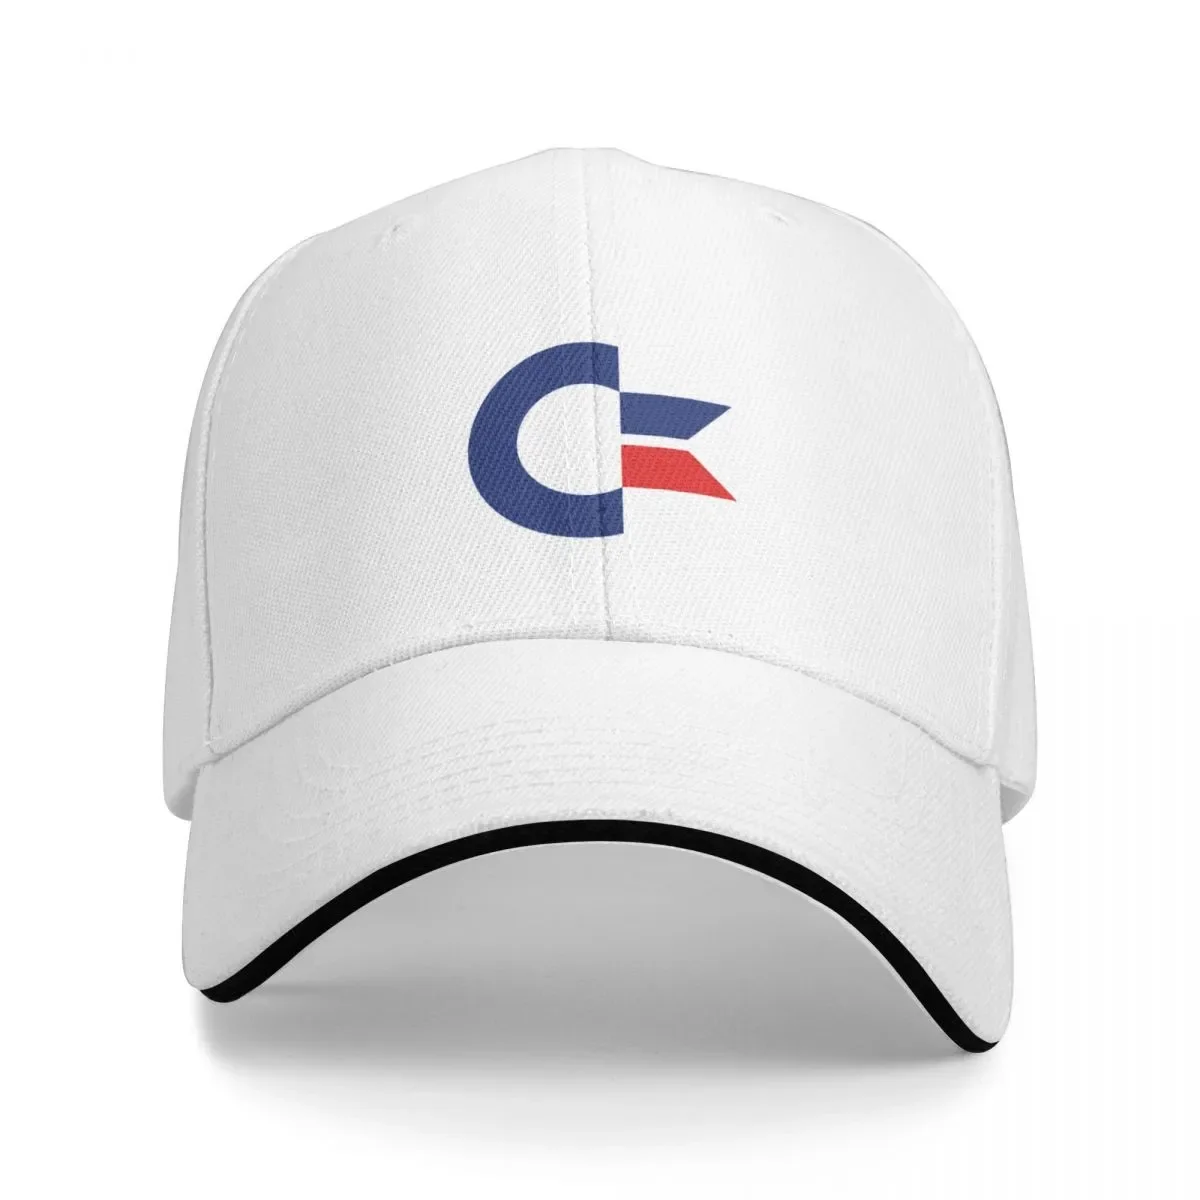 

New Commodore Business Machines Cap Baseball Cap Fashion beach hats sports caps Hat ladies Men's